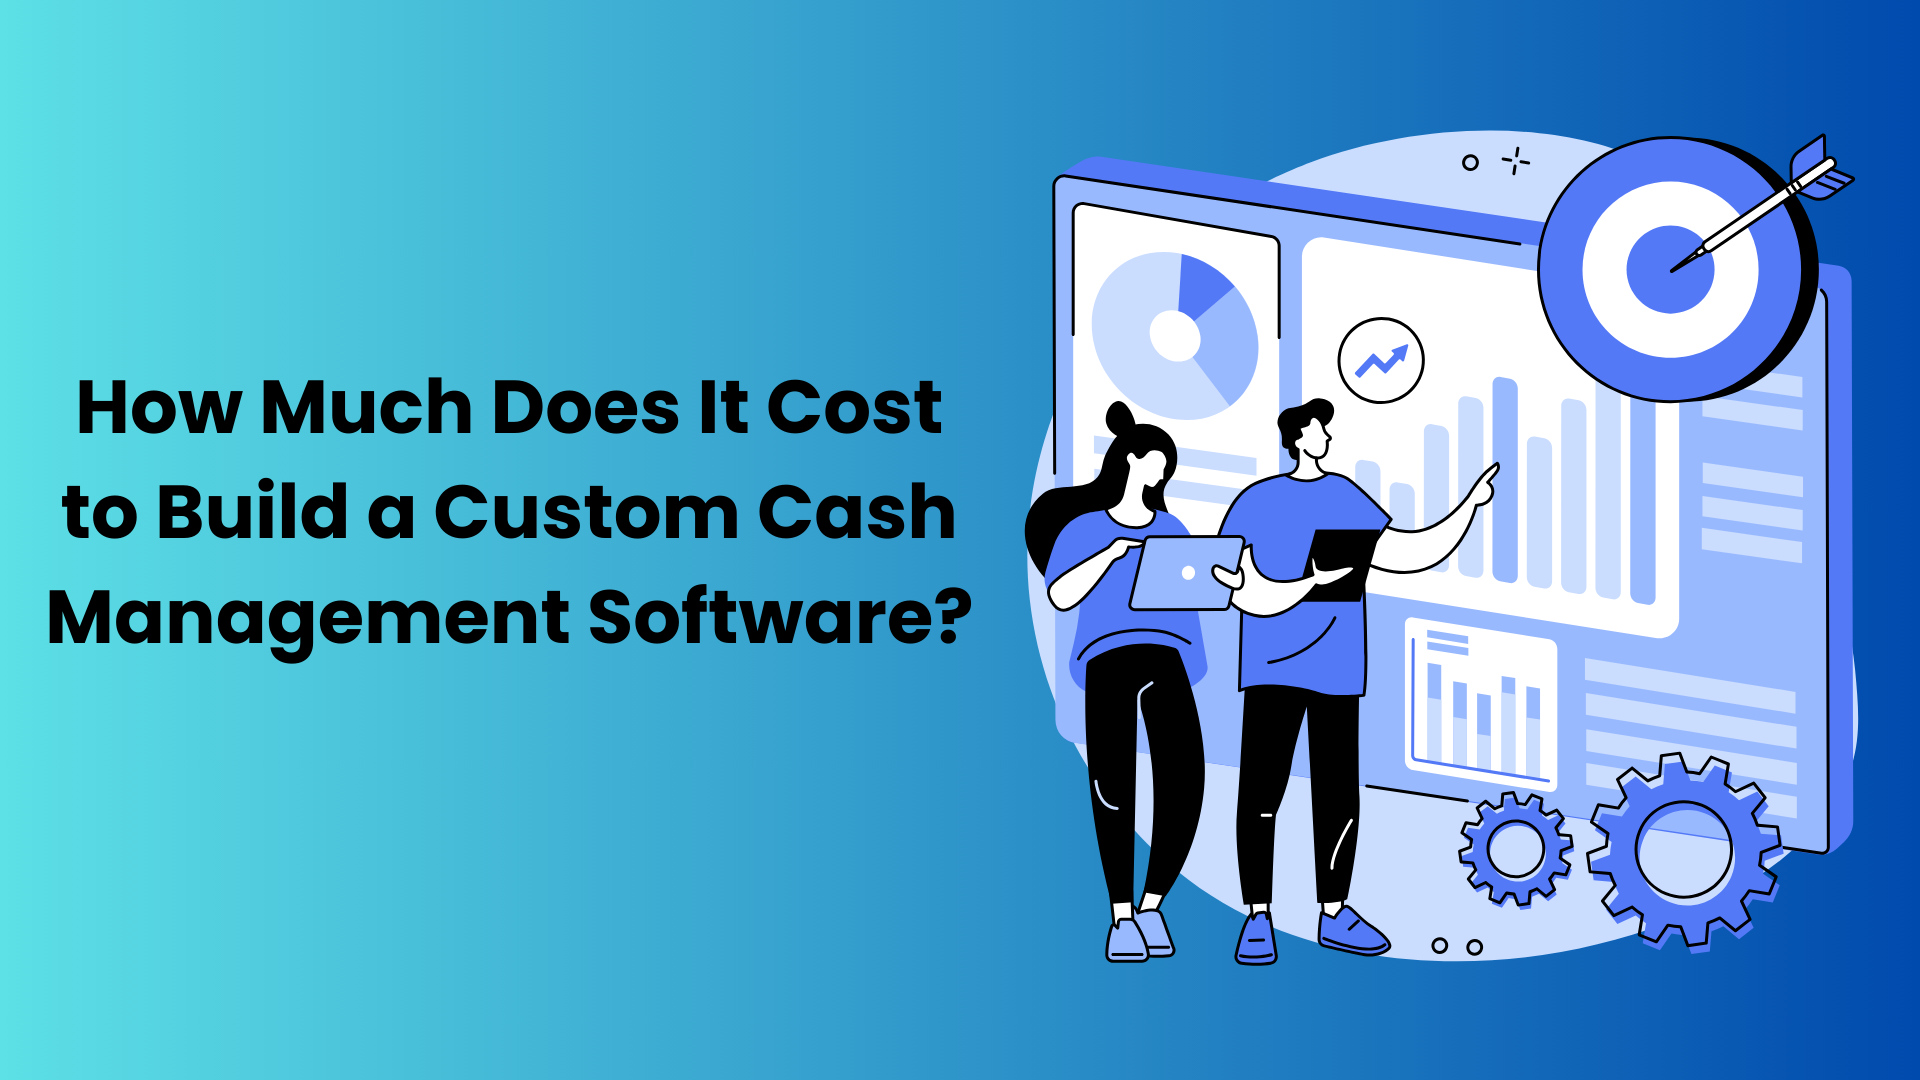 Build a Custom Cash Management Software